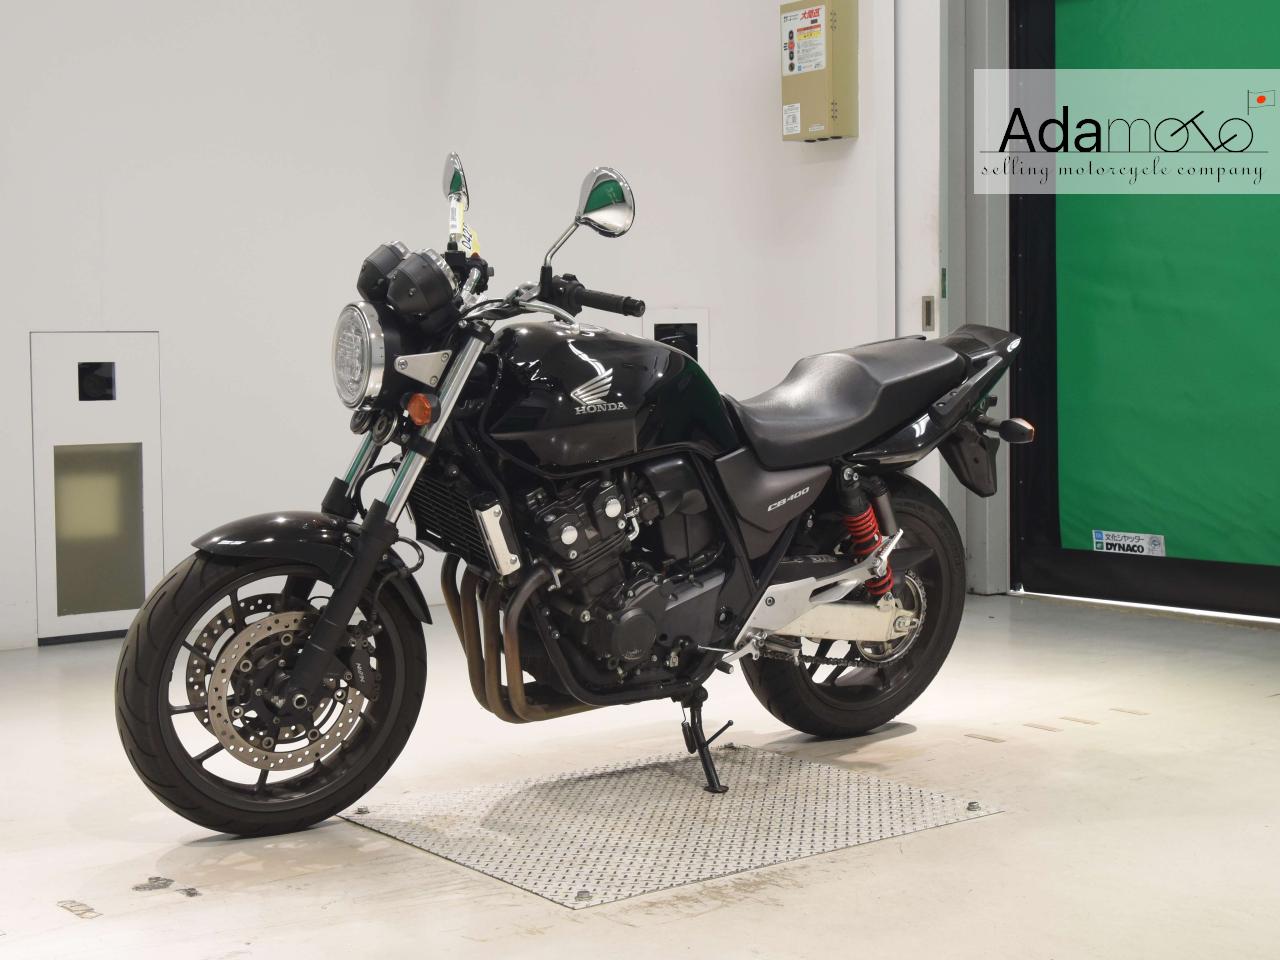 Honda CB400SF 4A - Adamoto - Motorcycles from Japan